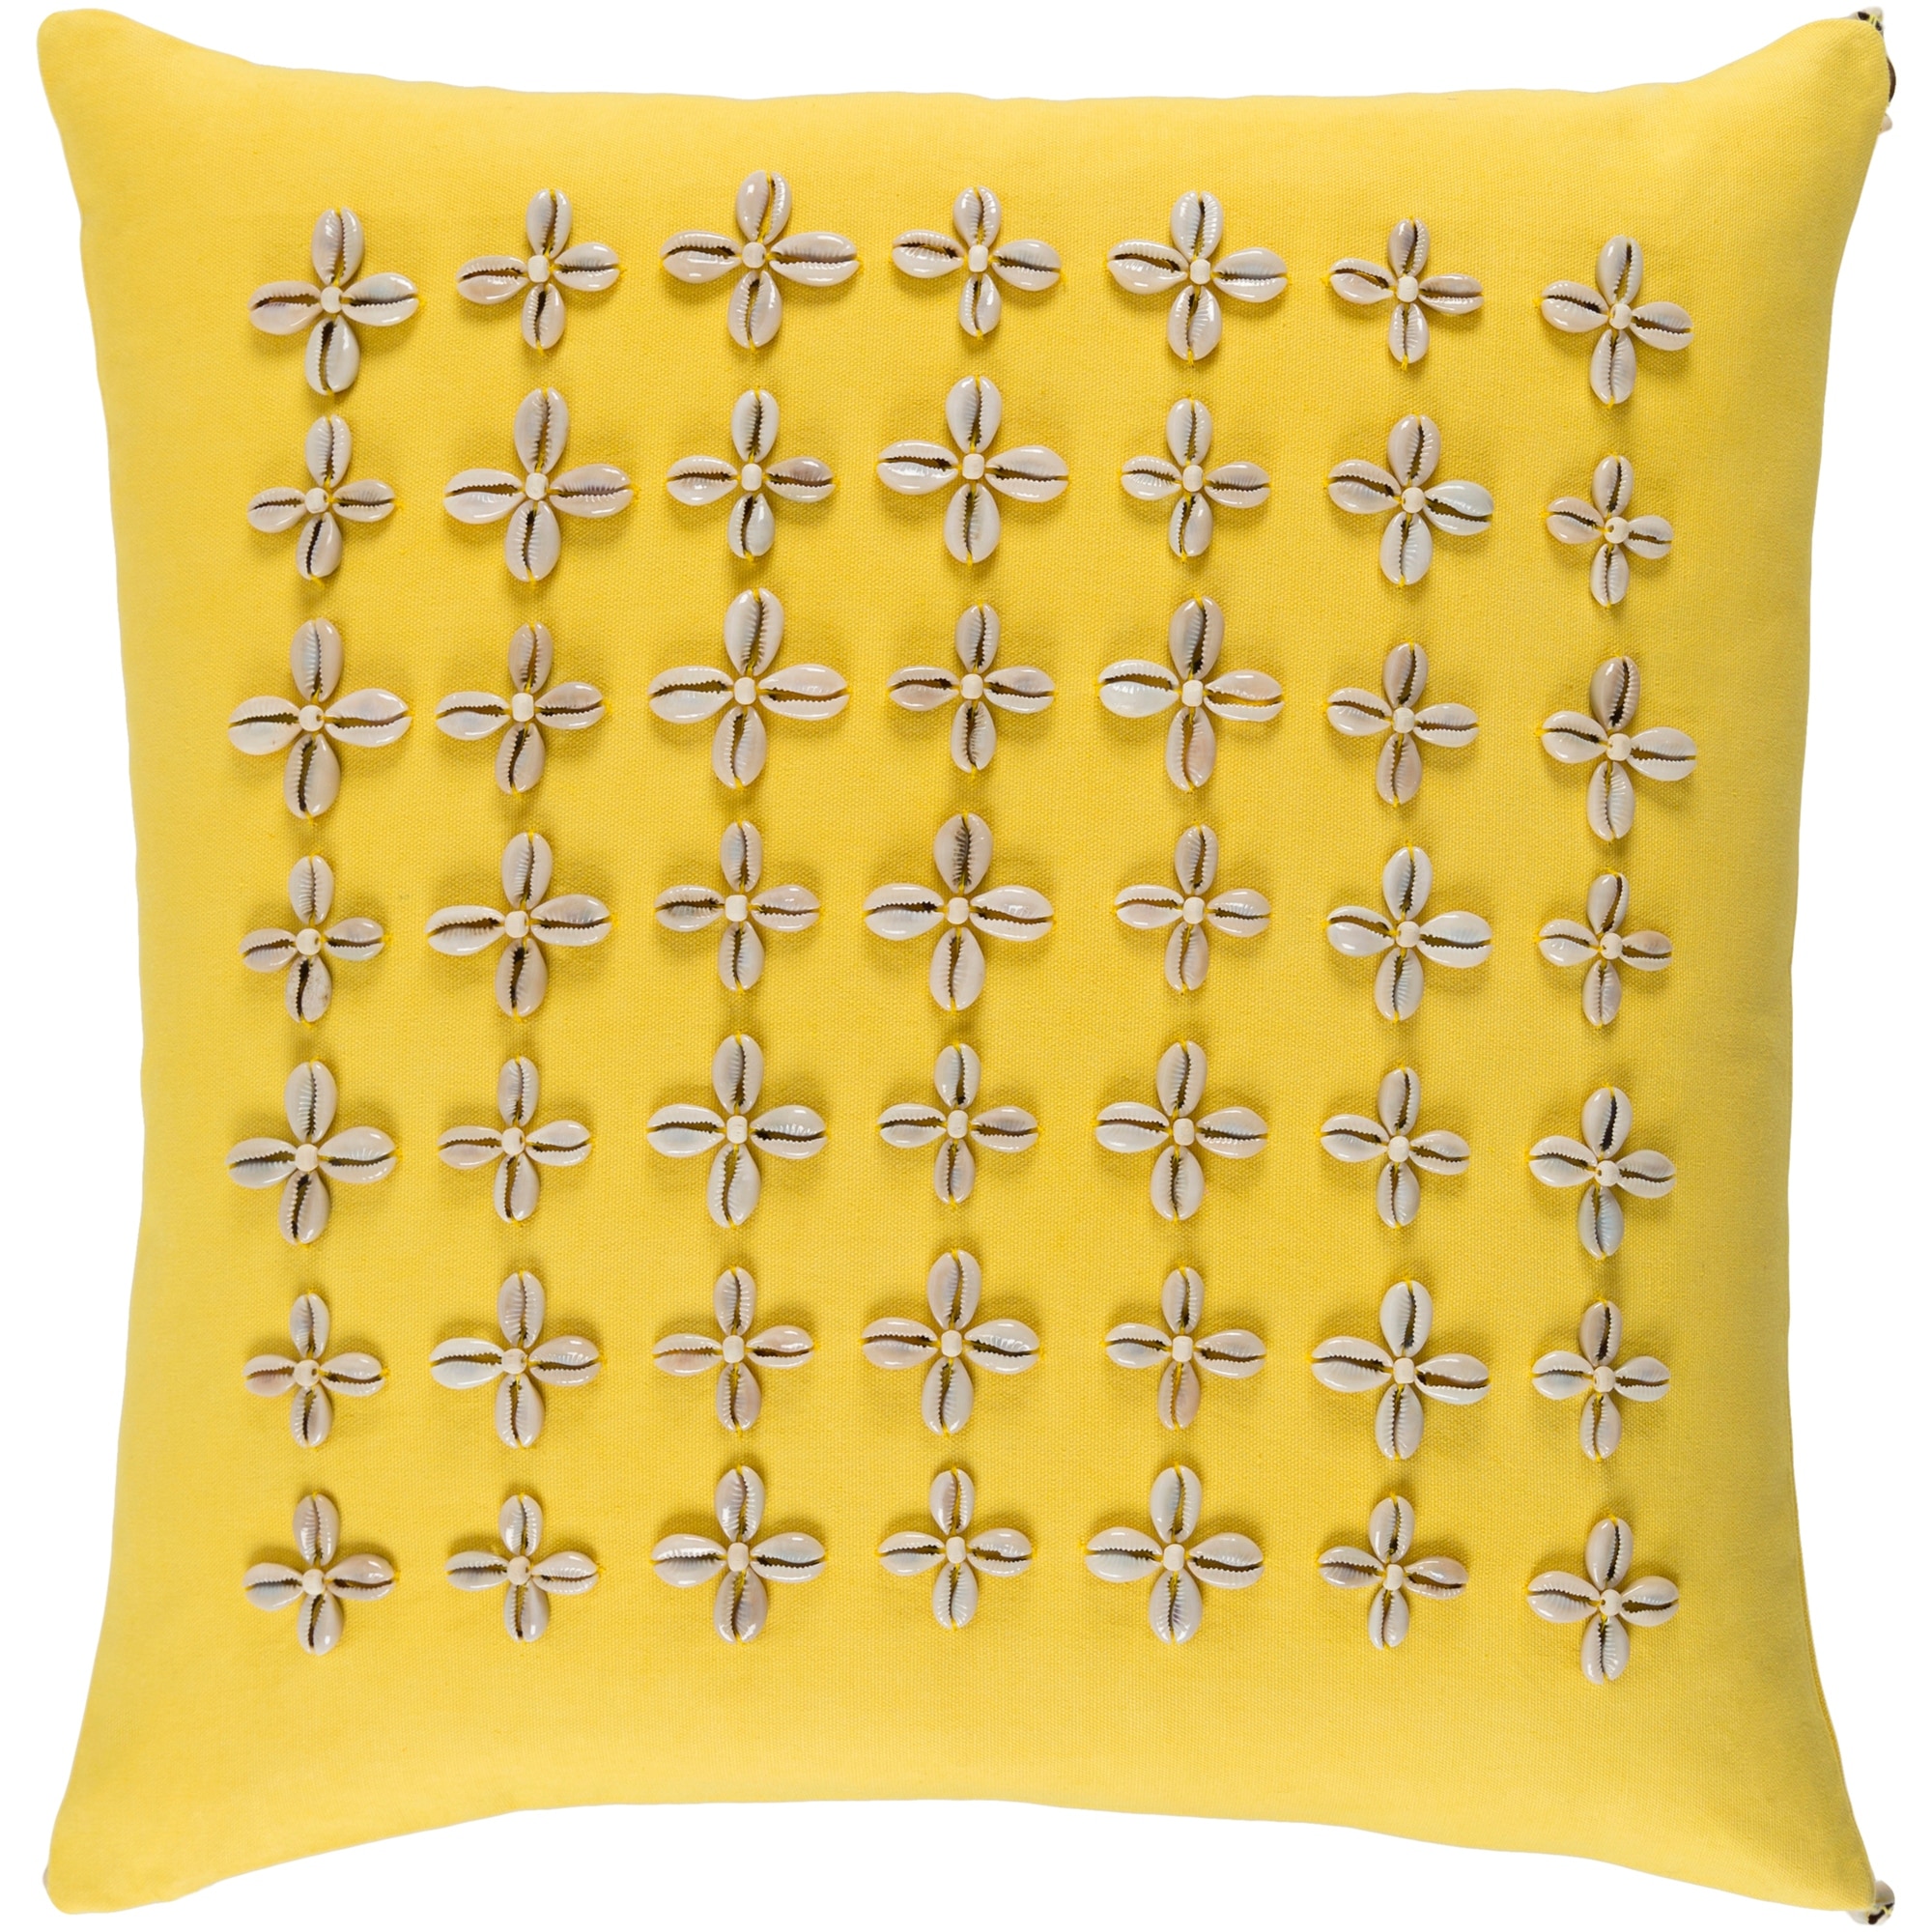 Decorative Rotorua Saffron 20-inch Throw Pillow Cover